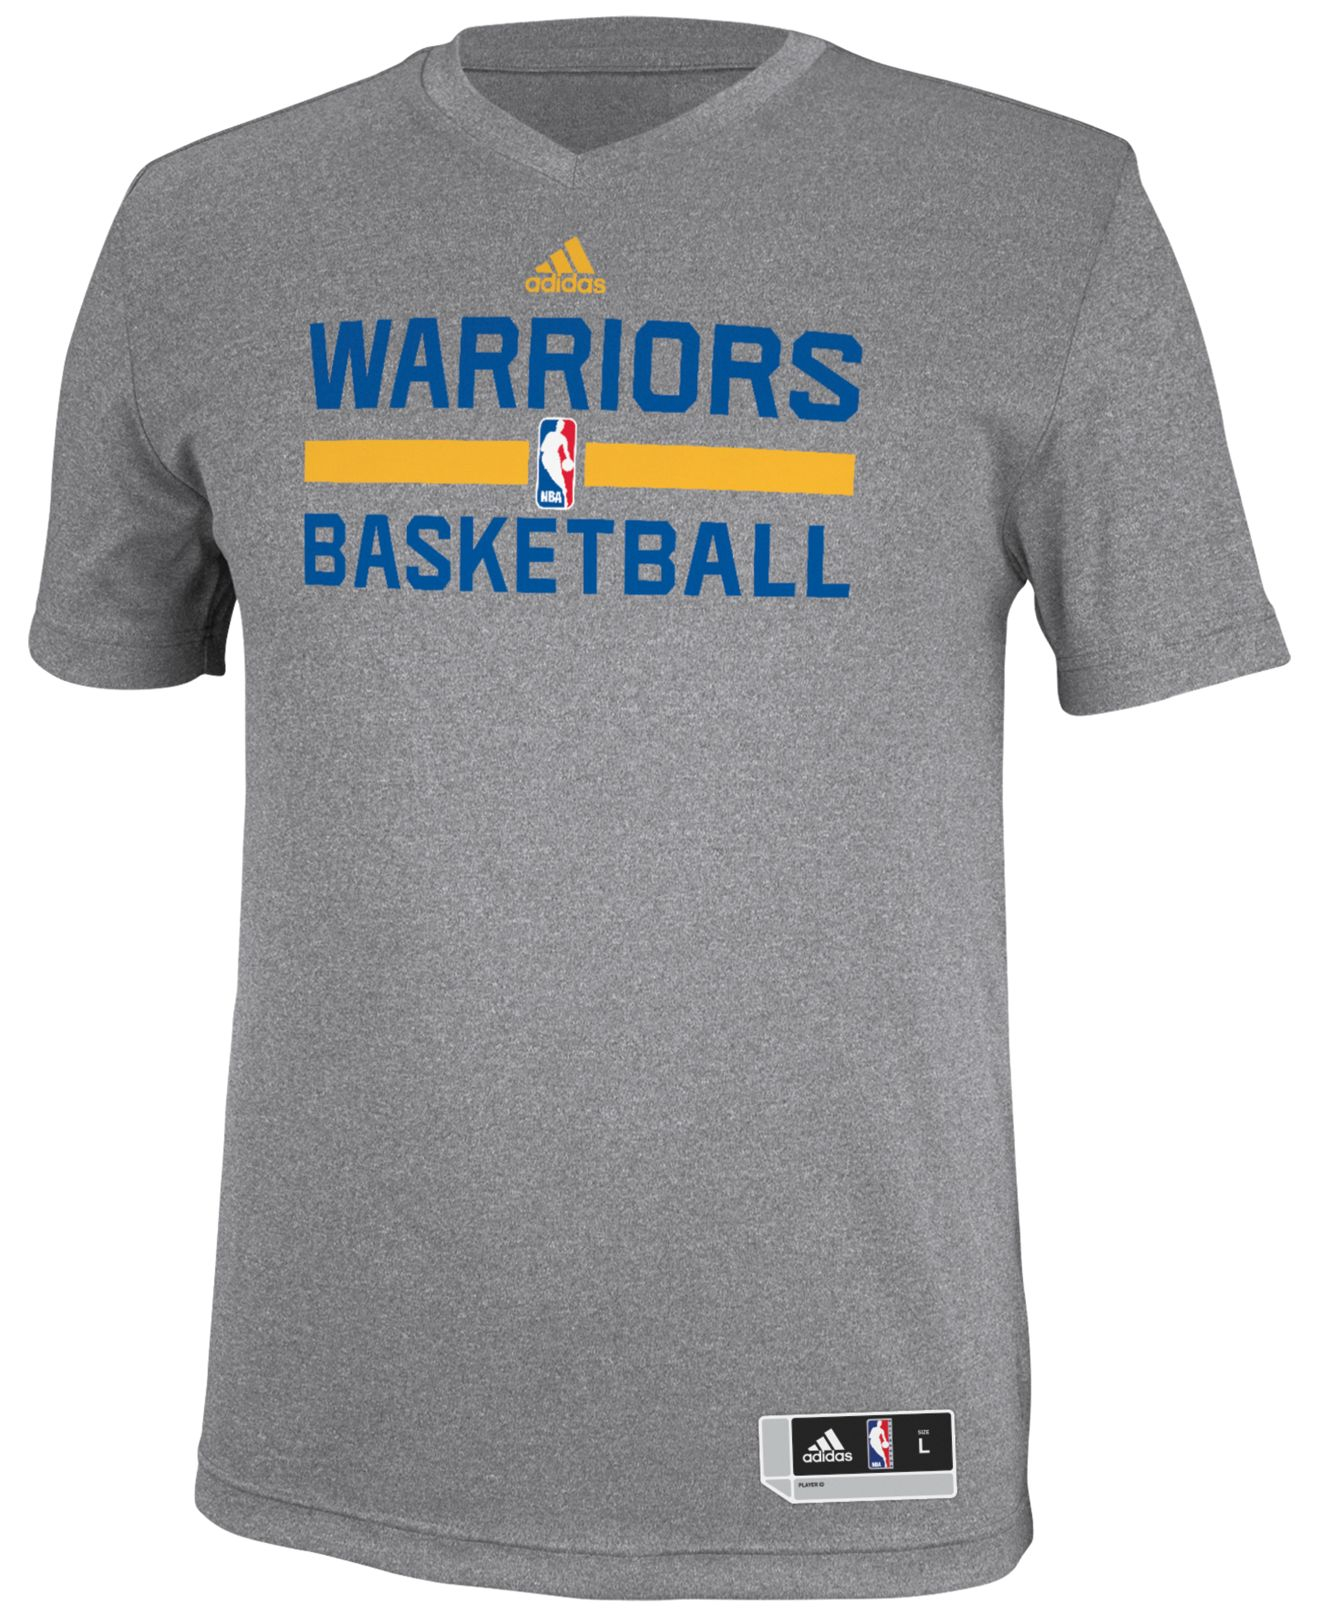 99.warriors Basketball Adidas Shirt Clearance, 56% OFF |  www.ingeniovirtual.com